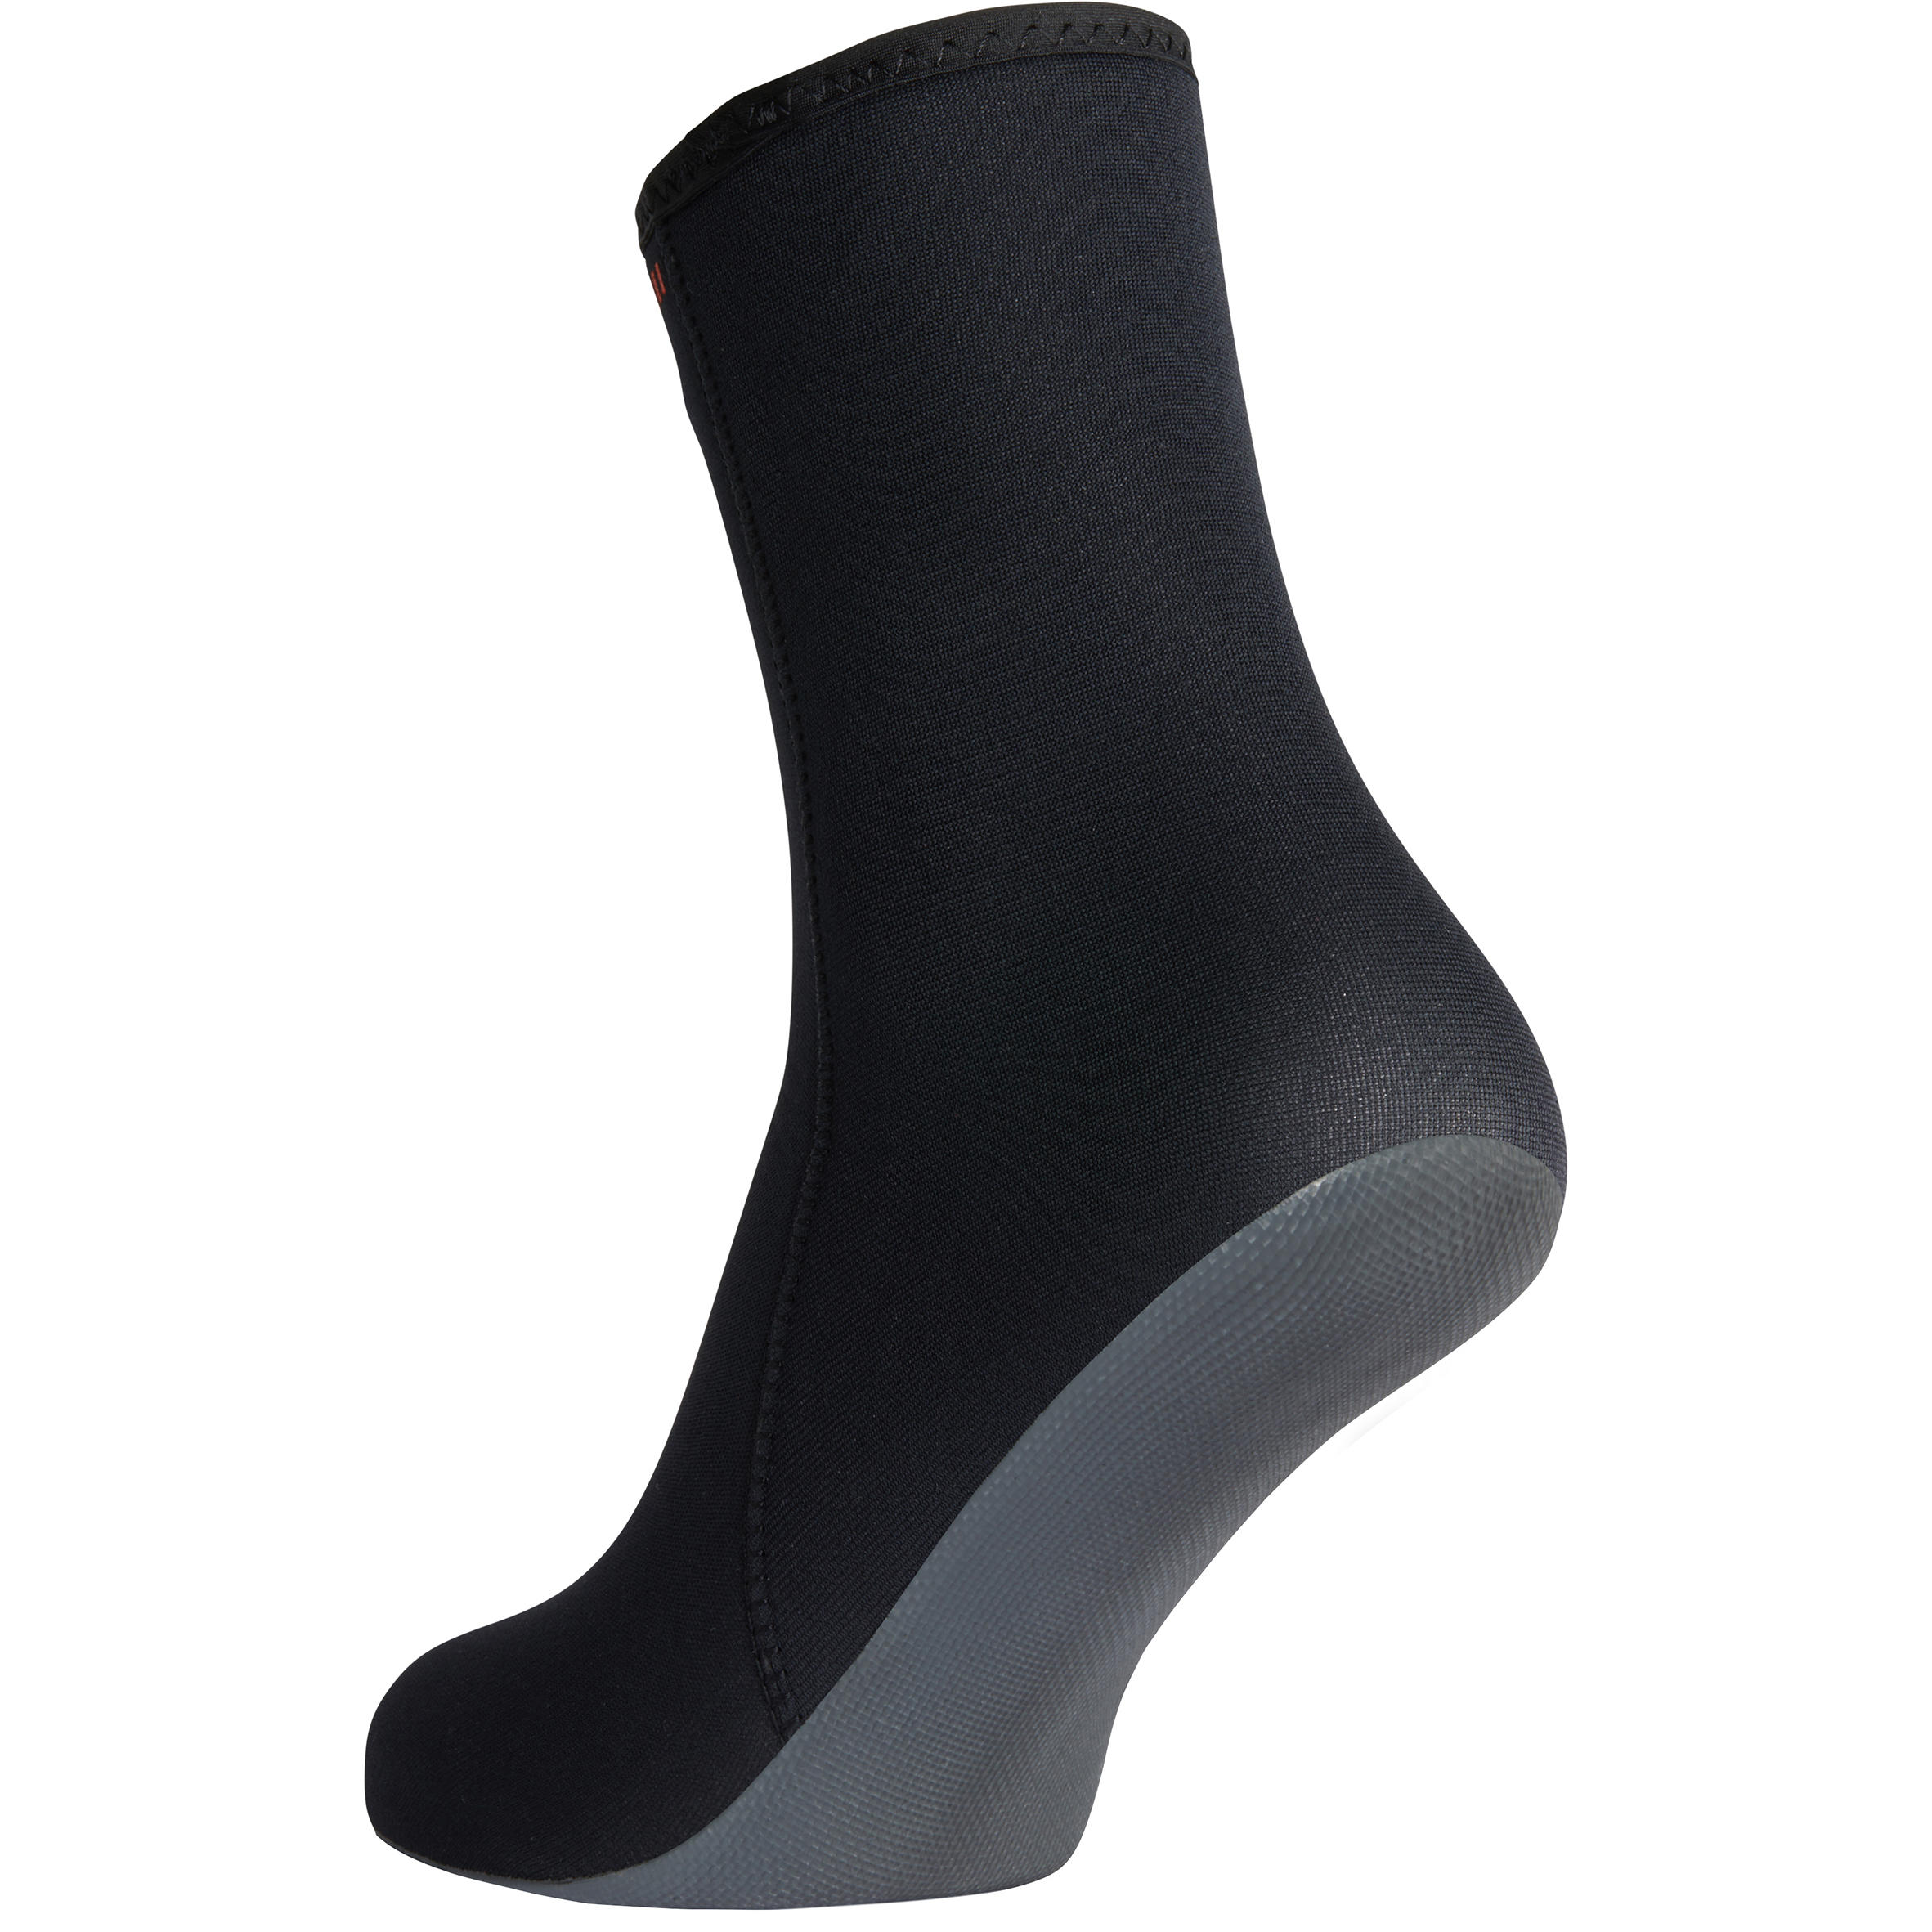 Neoprene Scuba Diving Shoes with 5mm neoprene sole - black 2/6